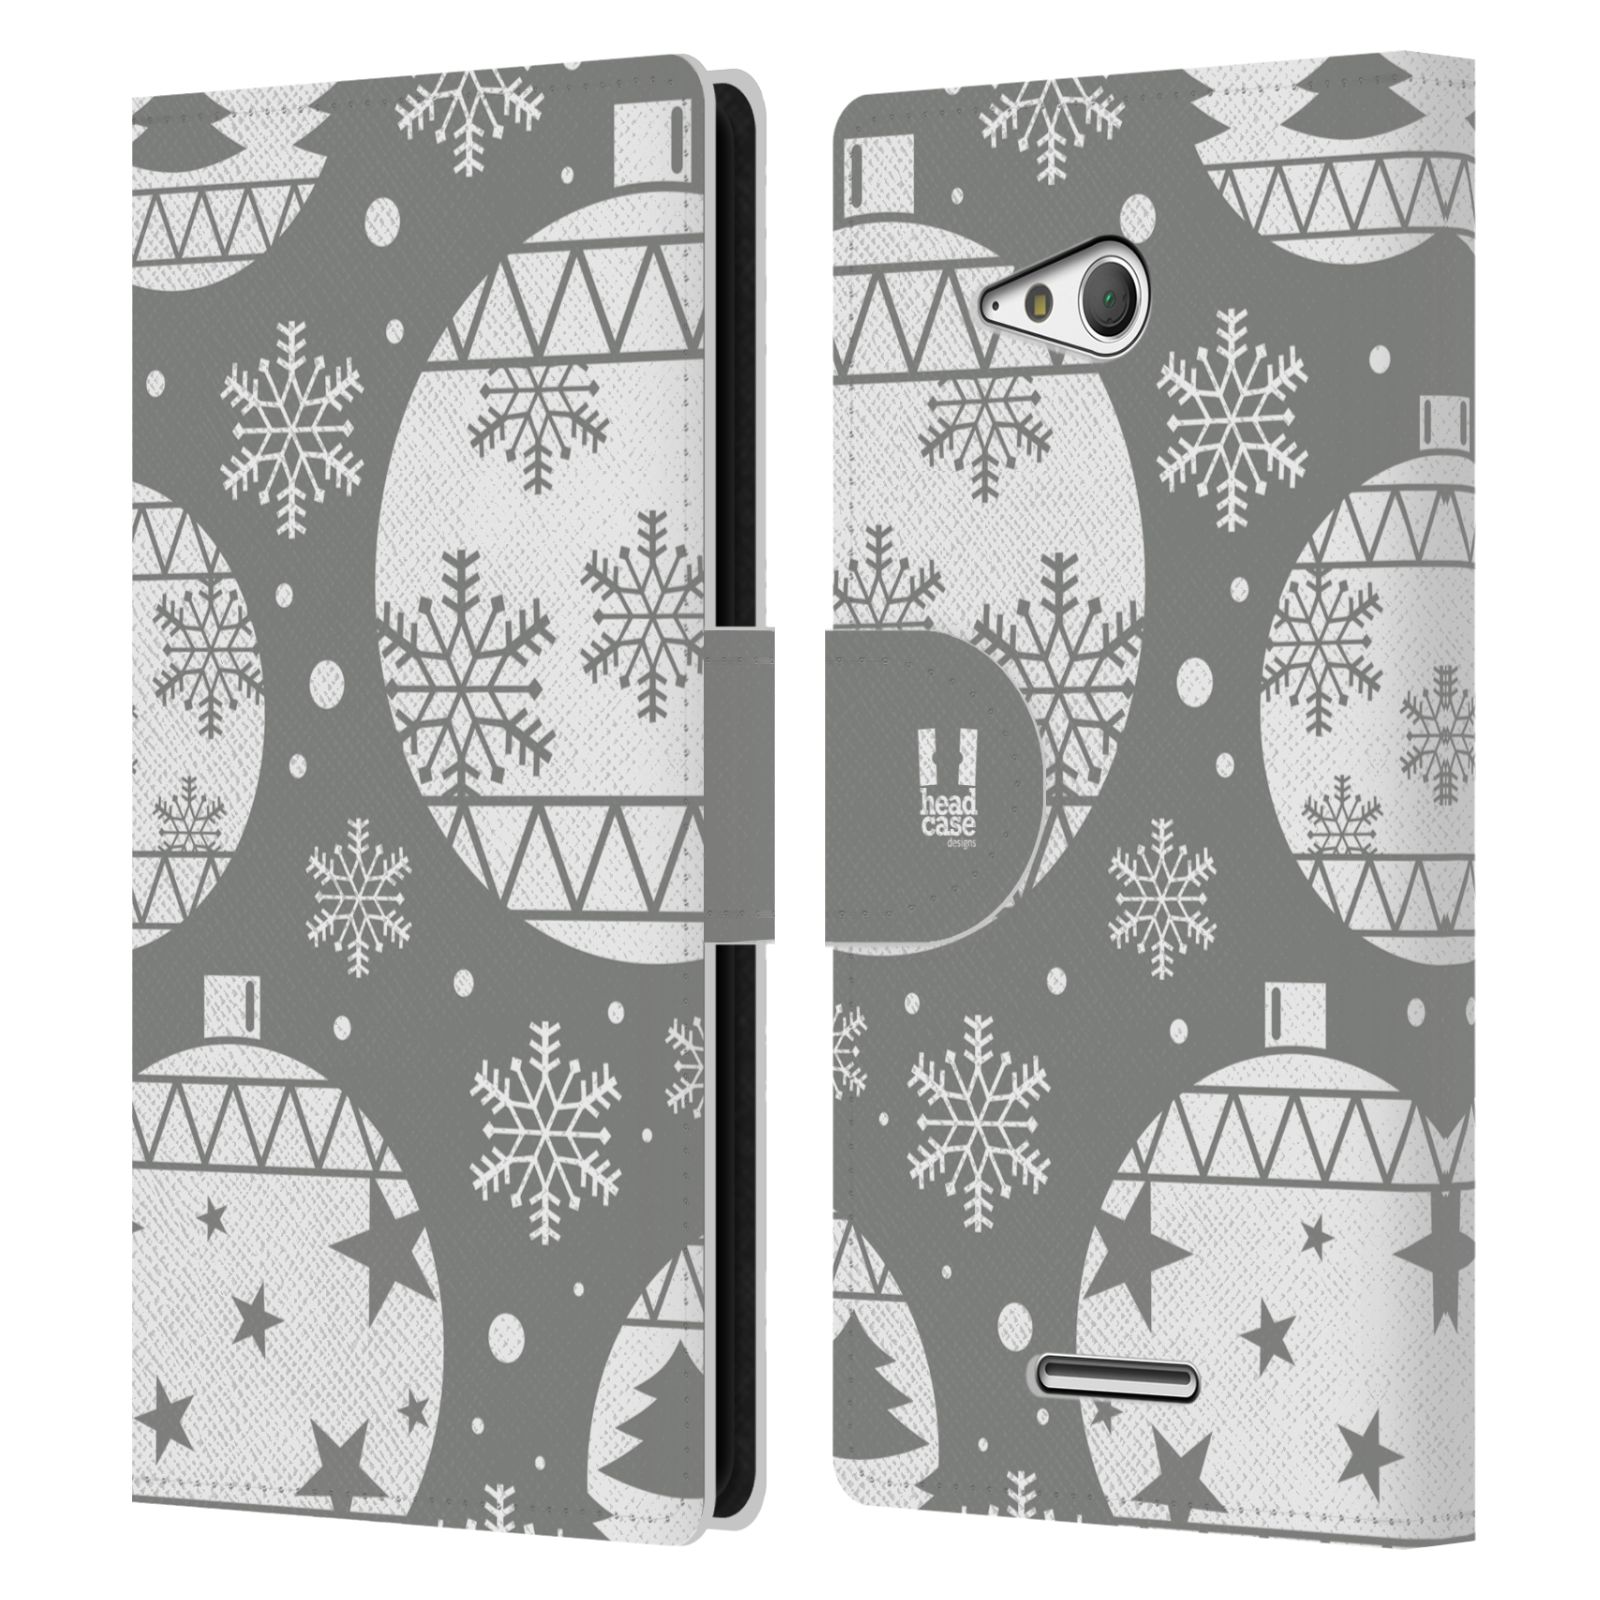 HEAD CASE Flipové pouzdro pro mobil SONY XPERIA E4g stříbrné vzory vánoční ozdoby